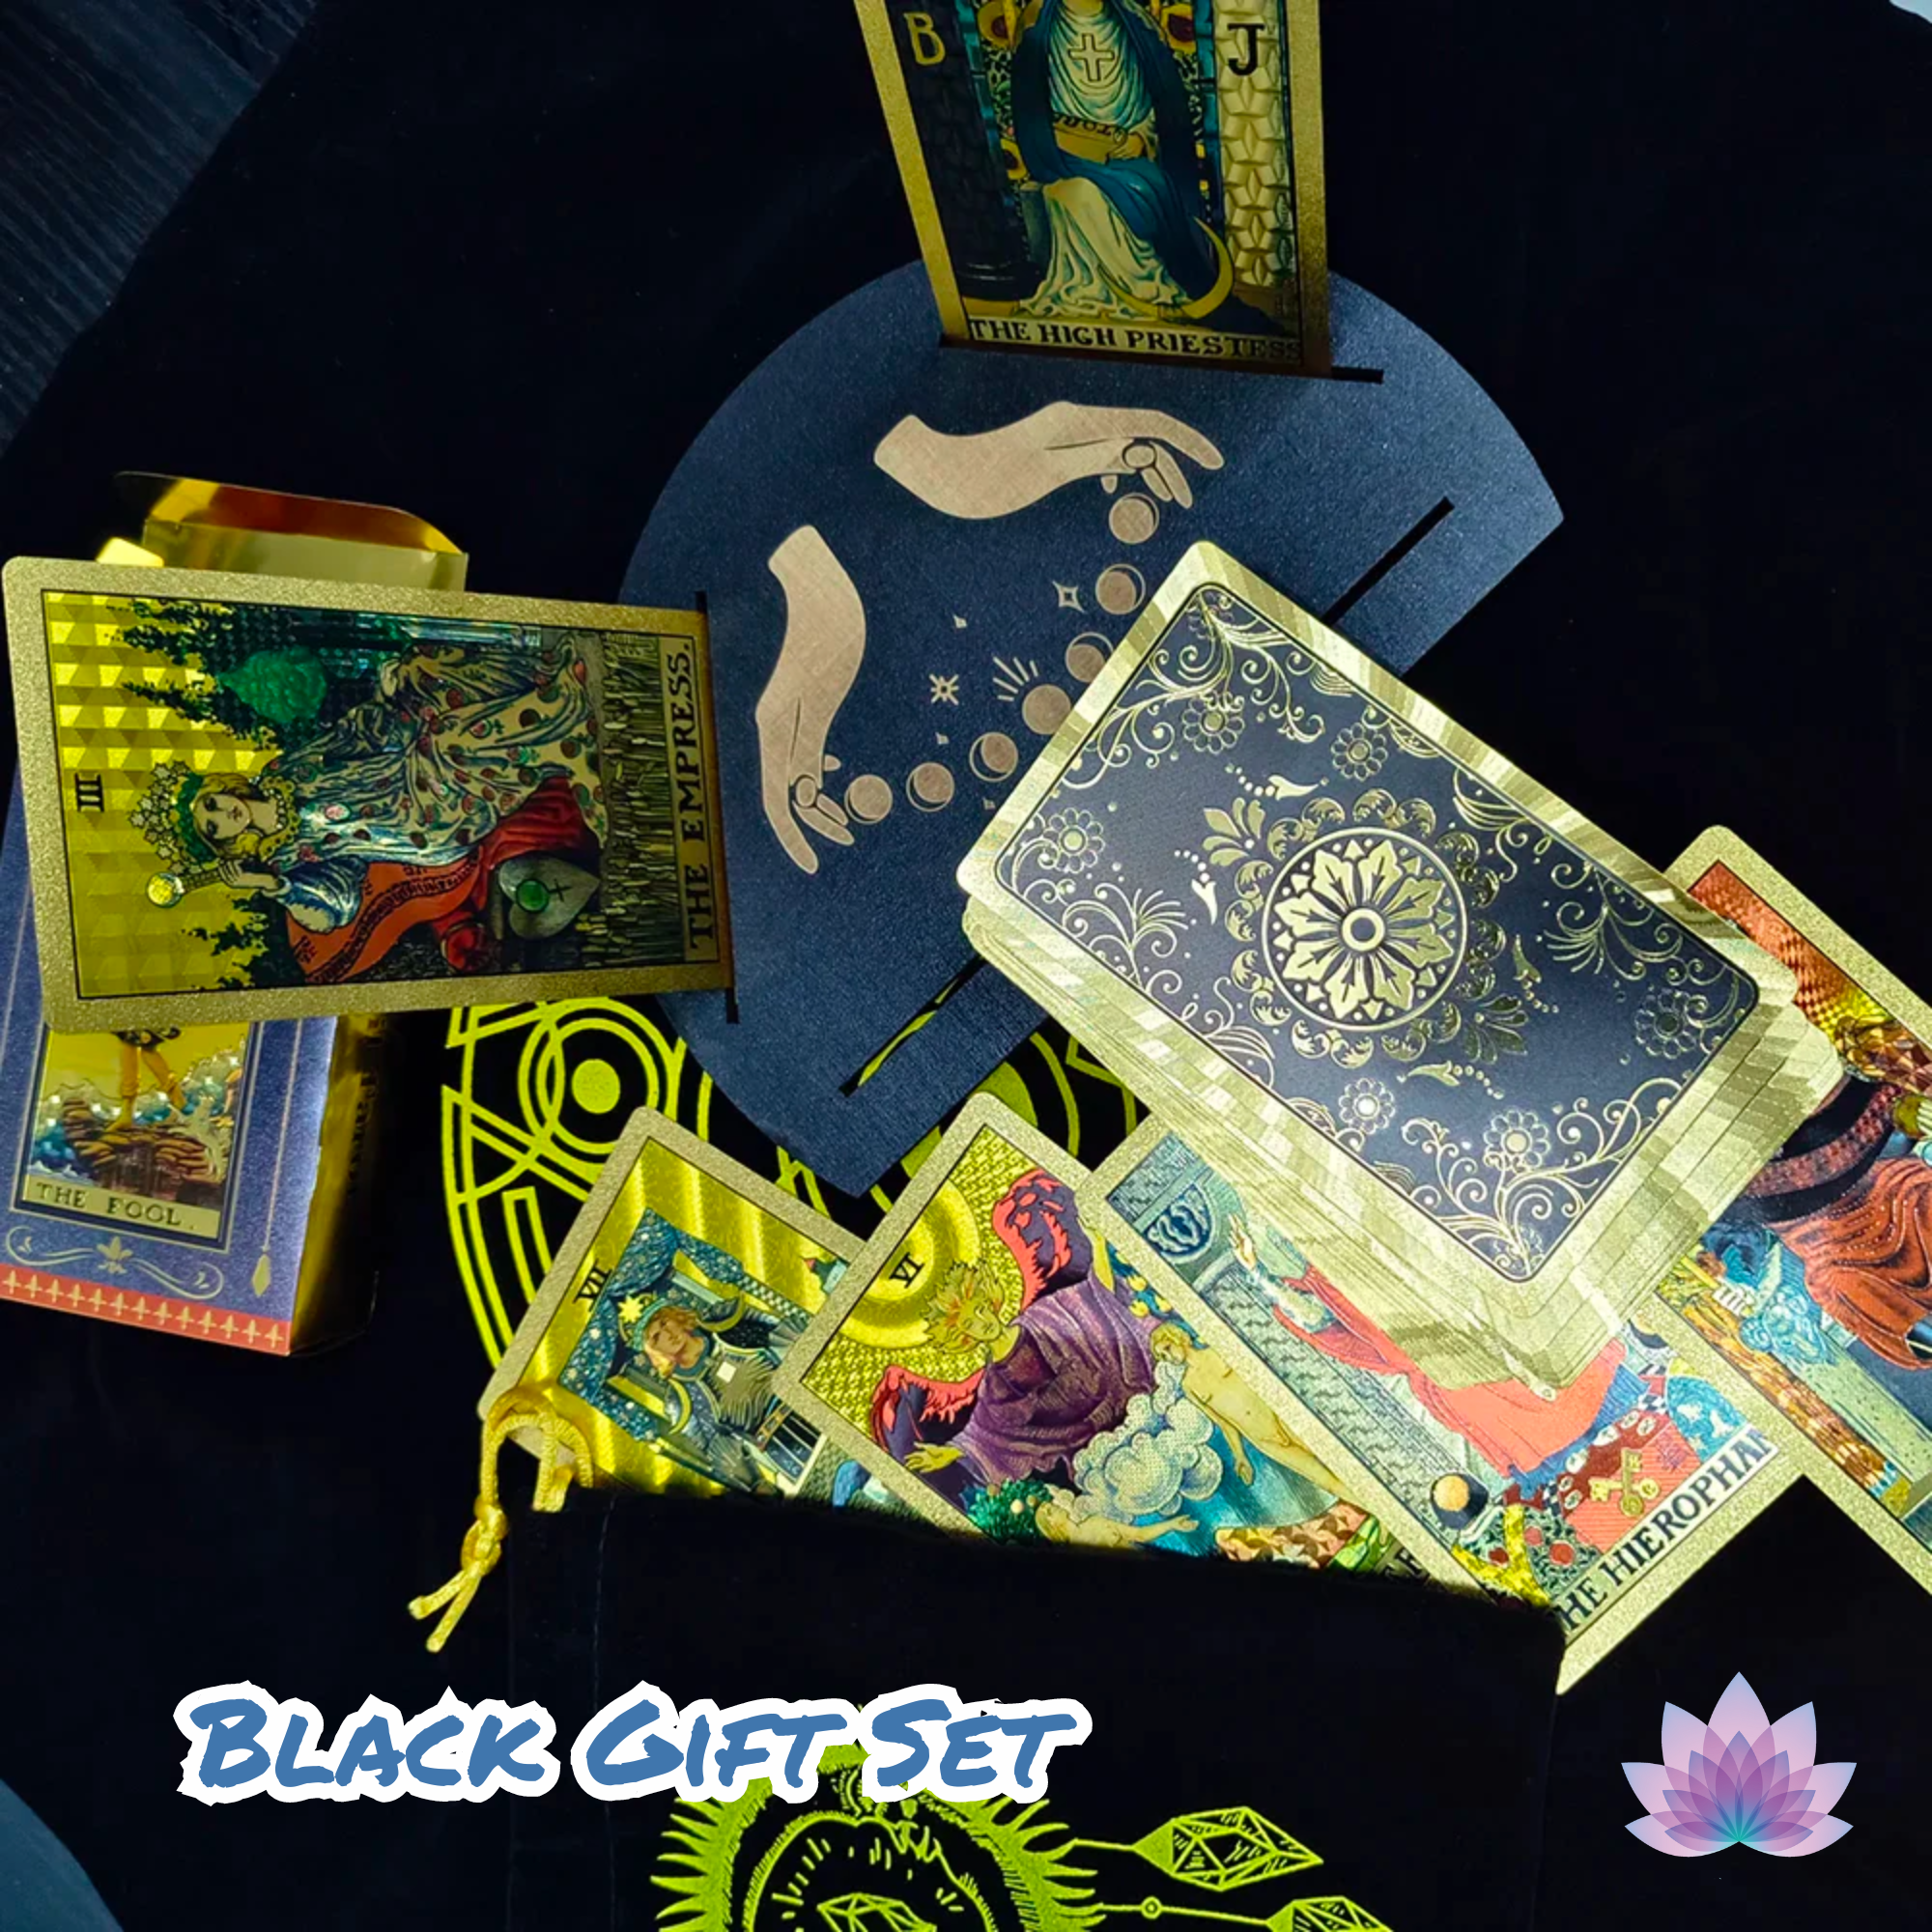 Gold Foil Tarot Cards Deck Premium Gift Box • Classic Waite Plastic Tear-Resistant Card + Velvet Bag + Wood Stand + Guidebook Divination Set • Apollo Tarot Shop